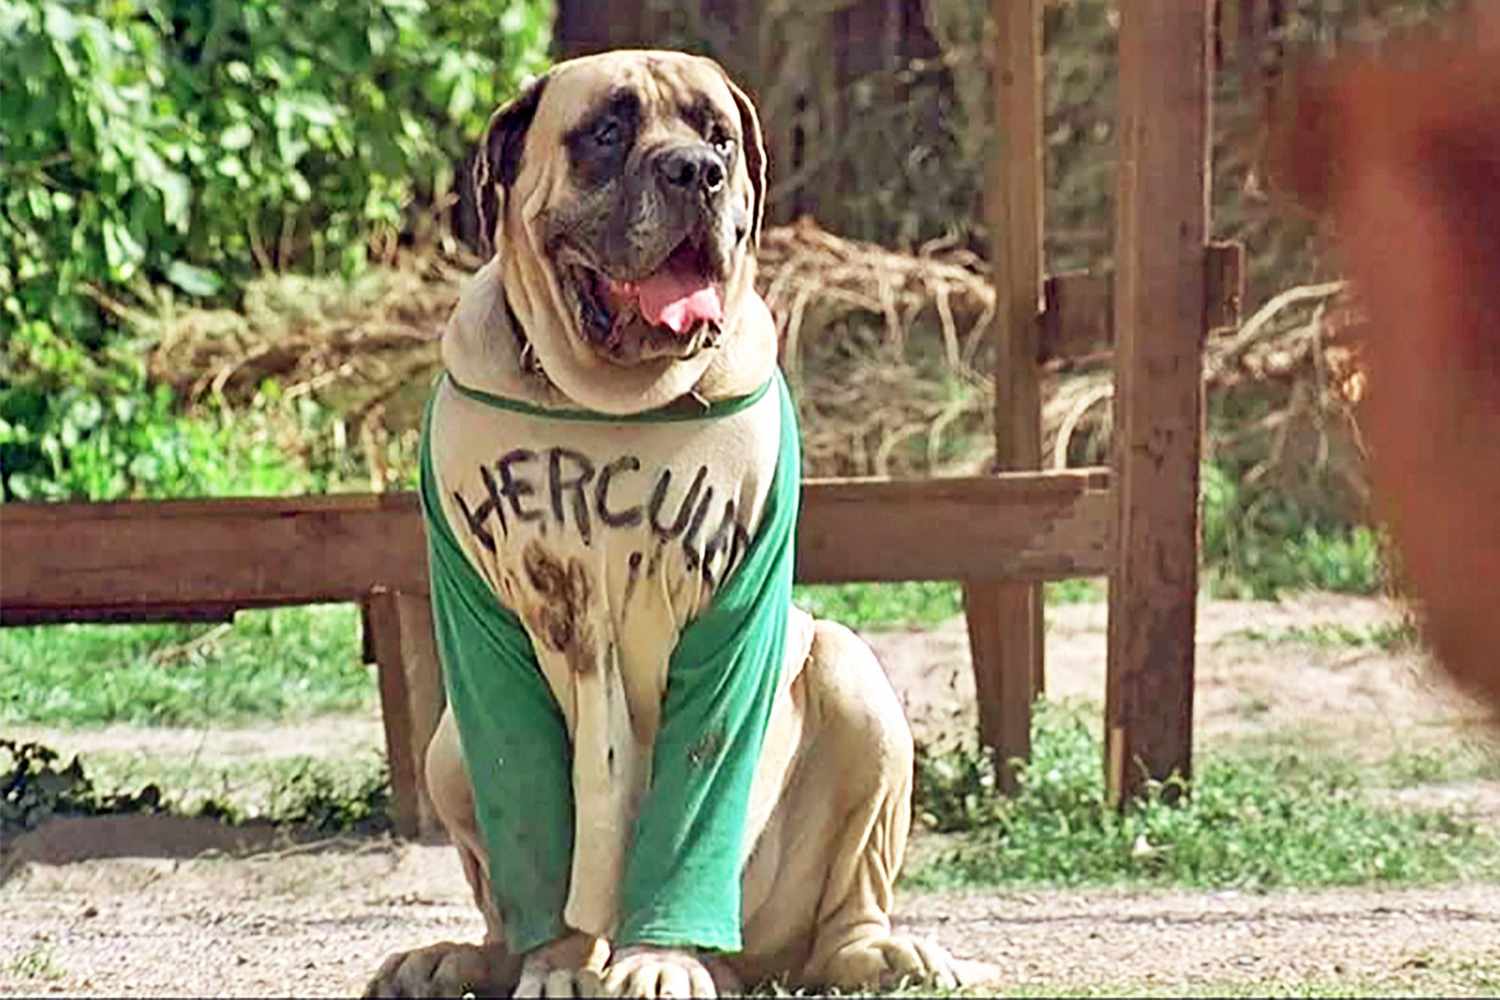 Tan mastiff sitting while wearing a green baseball tee that says "Hercules"